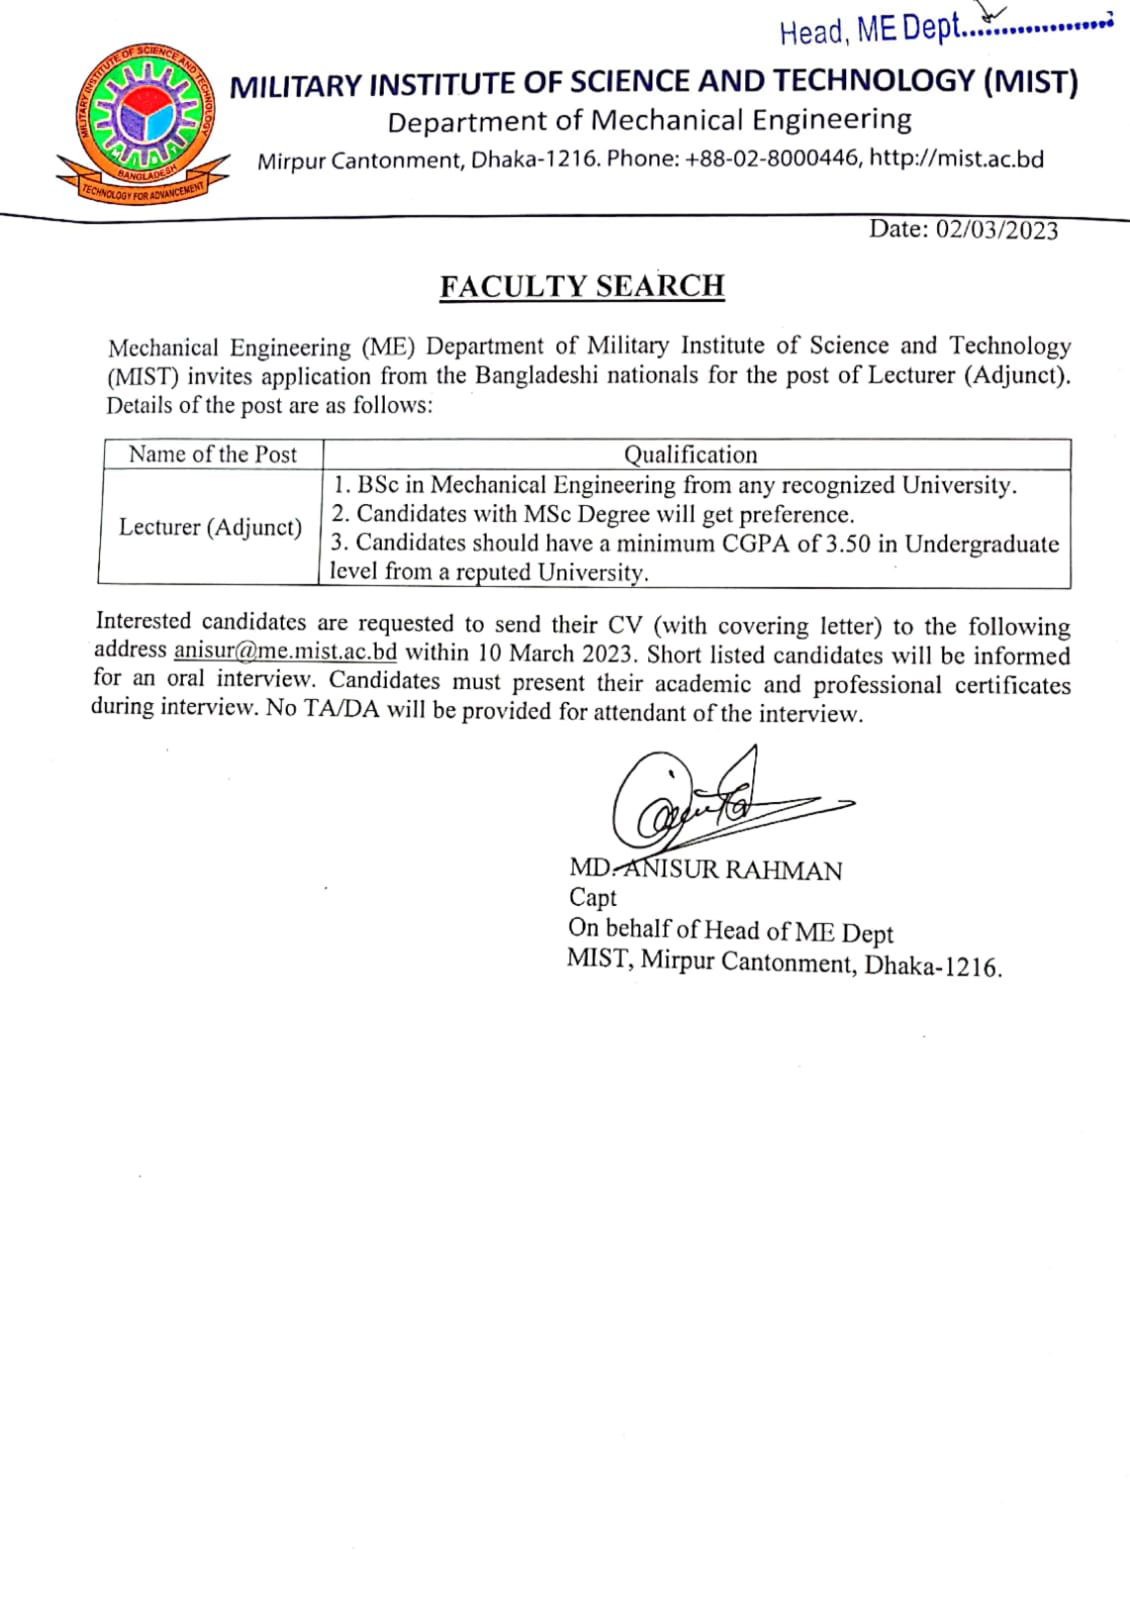 Faculty Recruitment Circular at Mechanical Engineering Department